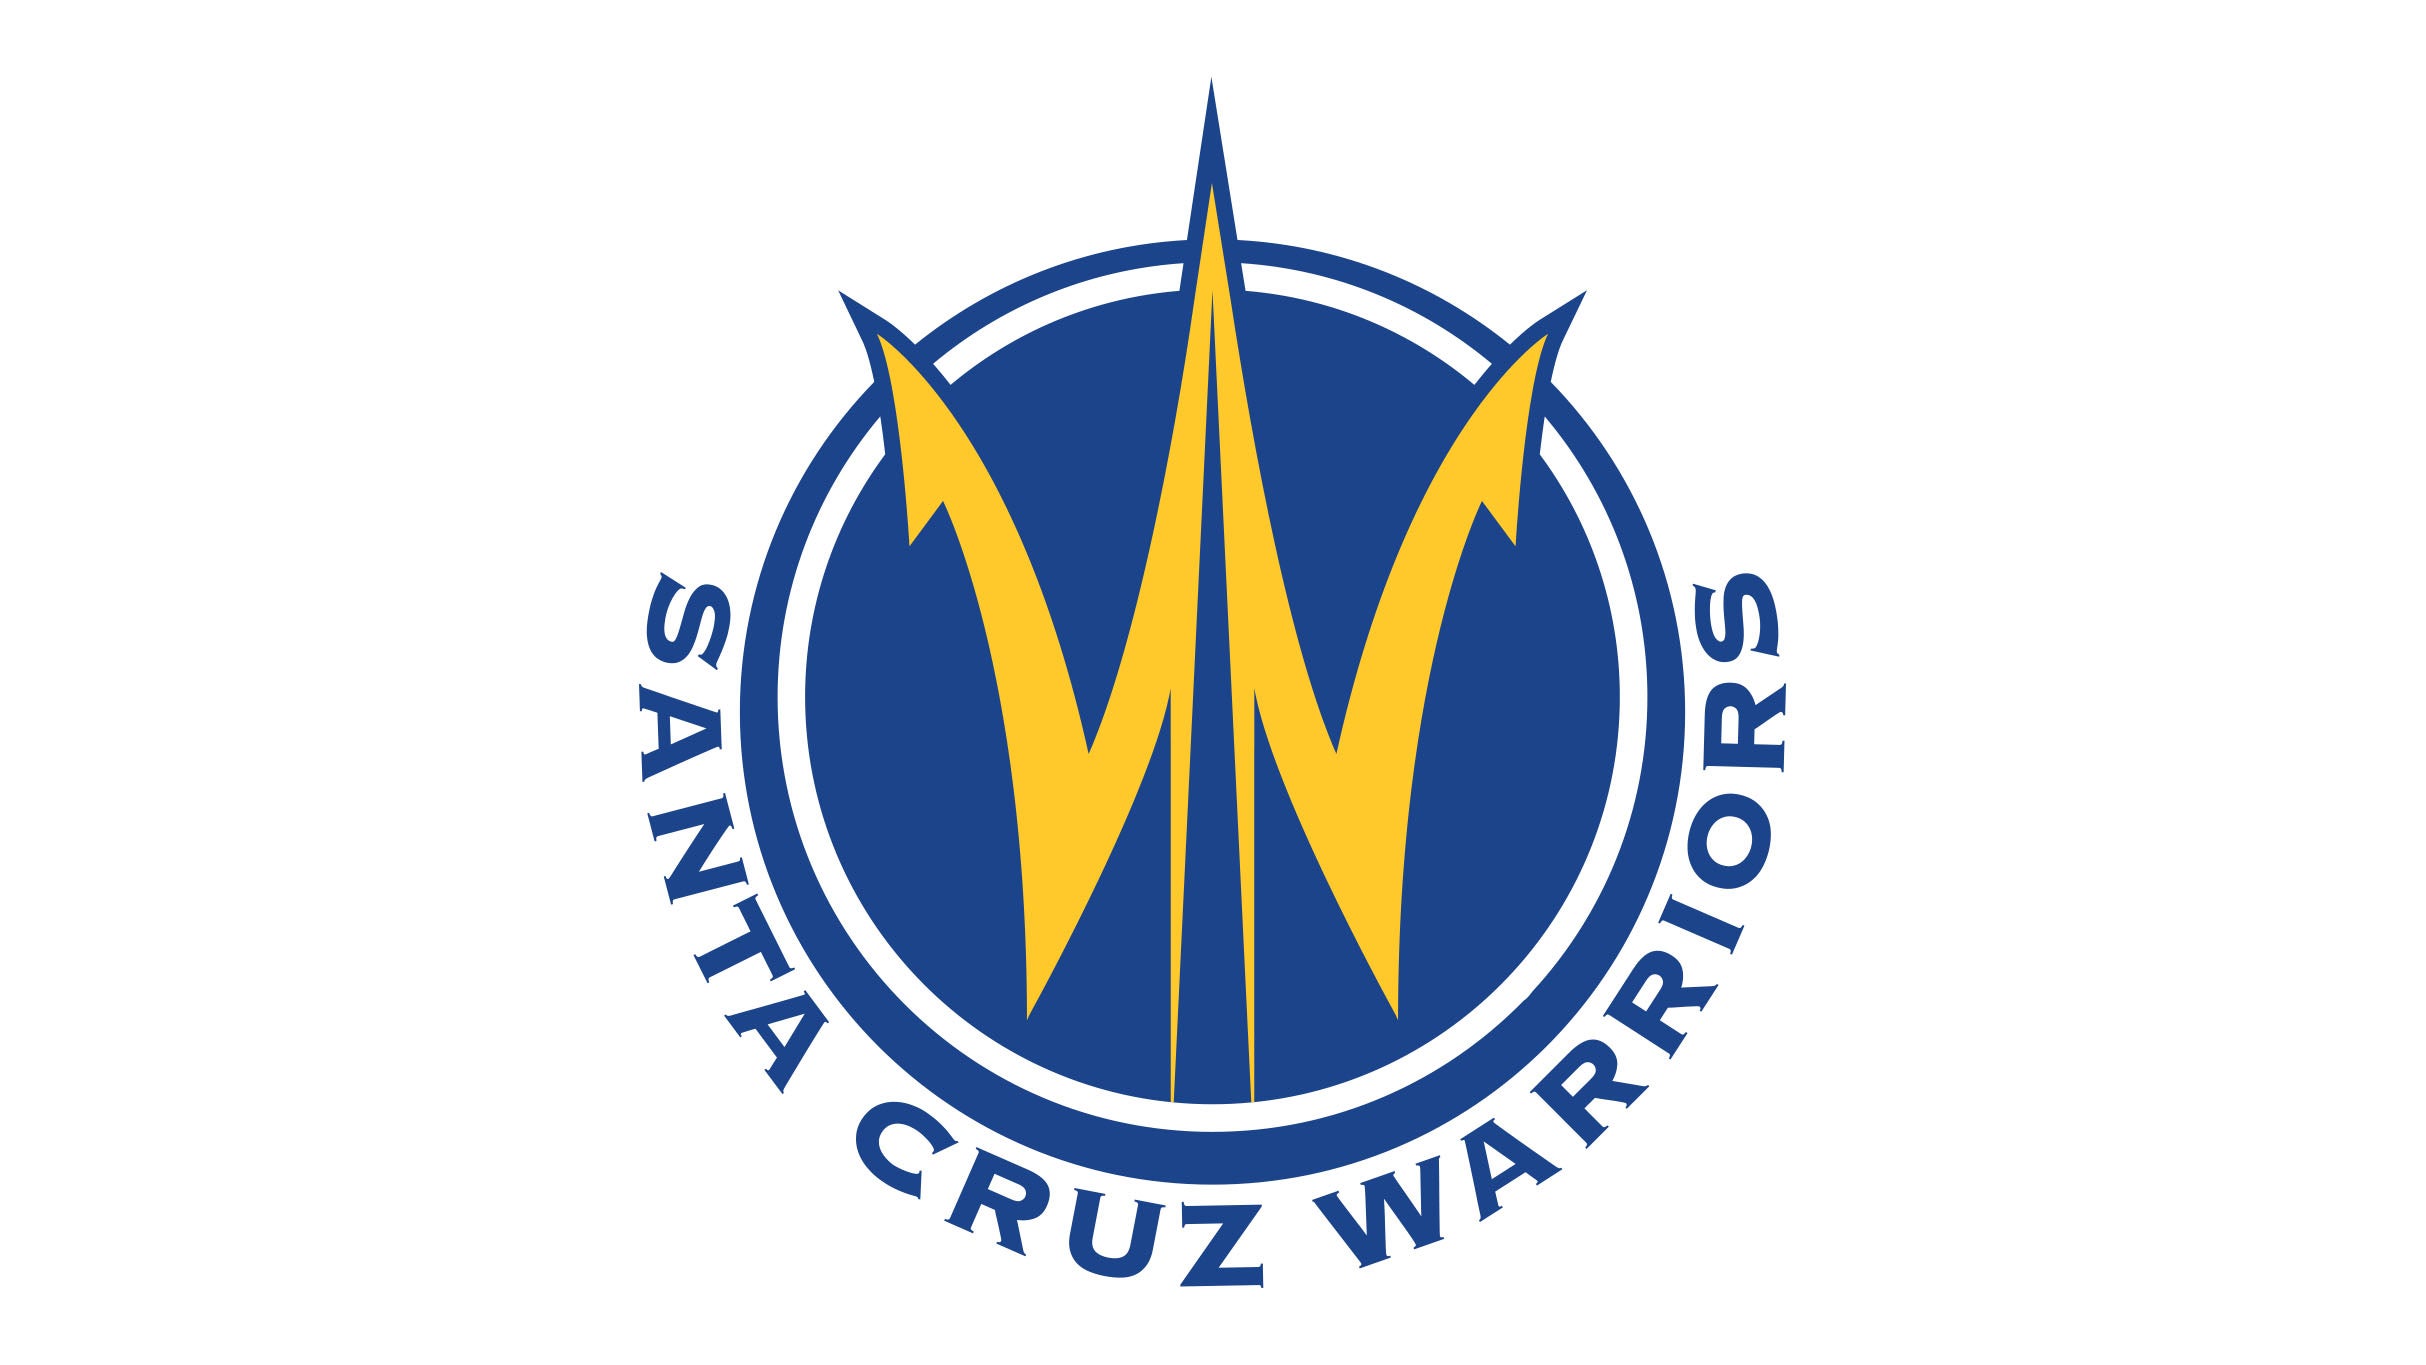 Santa Cruz Warriors vs. South Bay Lakers in Santa Cruz promo photo for STicketmaster Early Access presale offer code